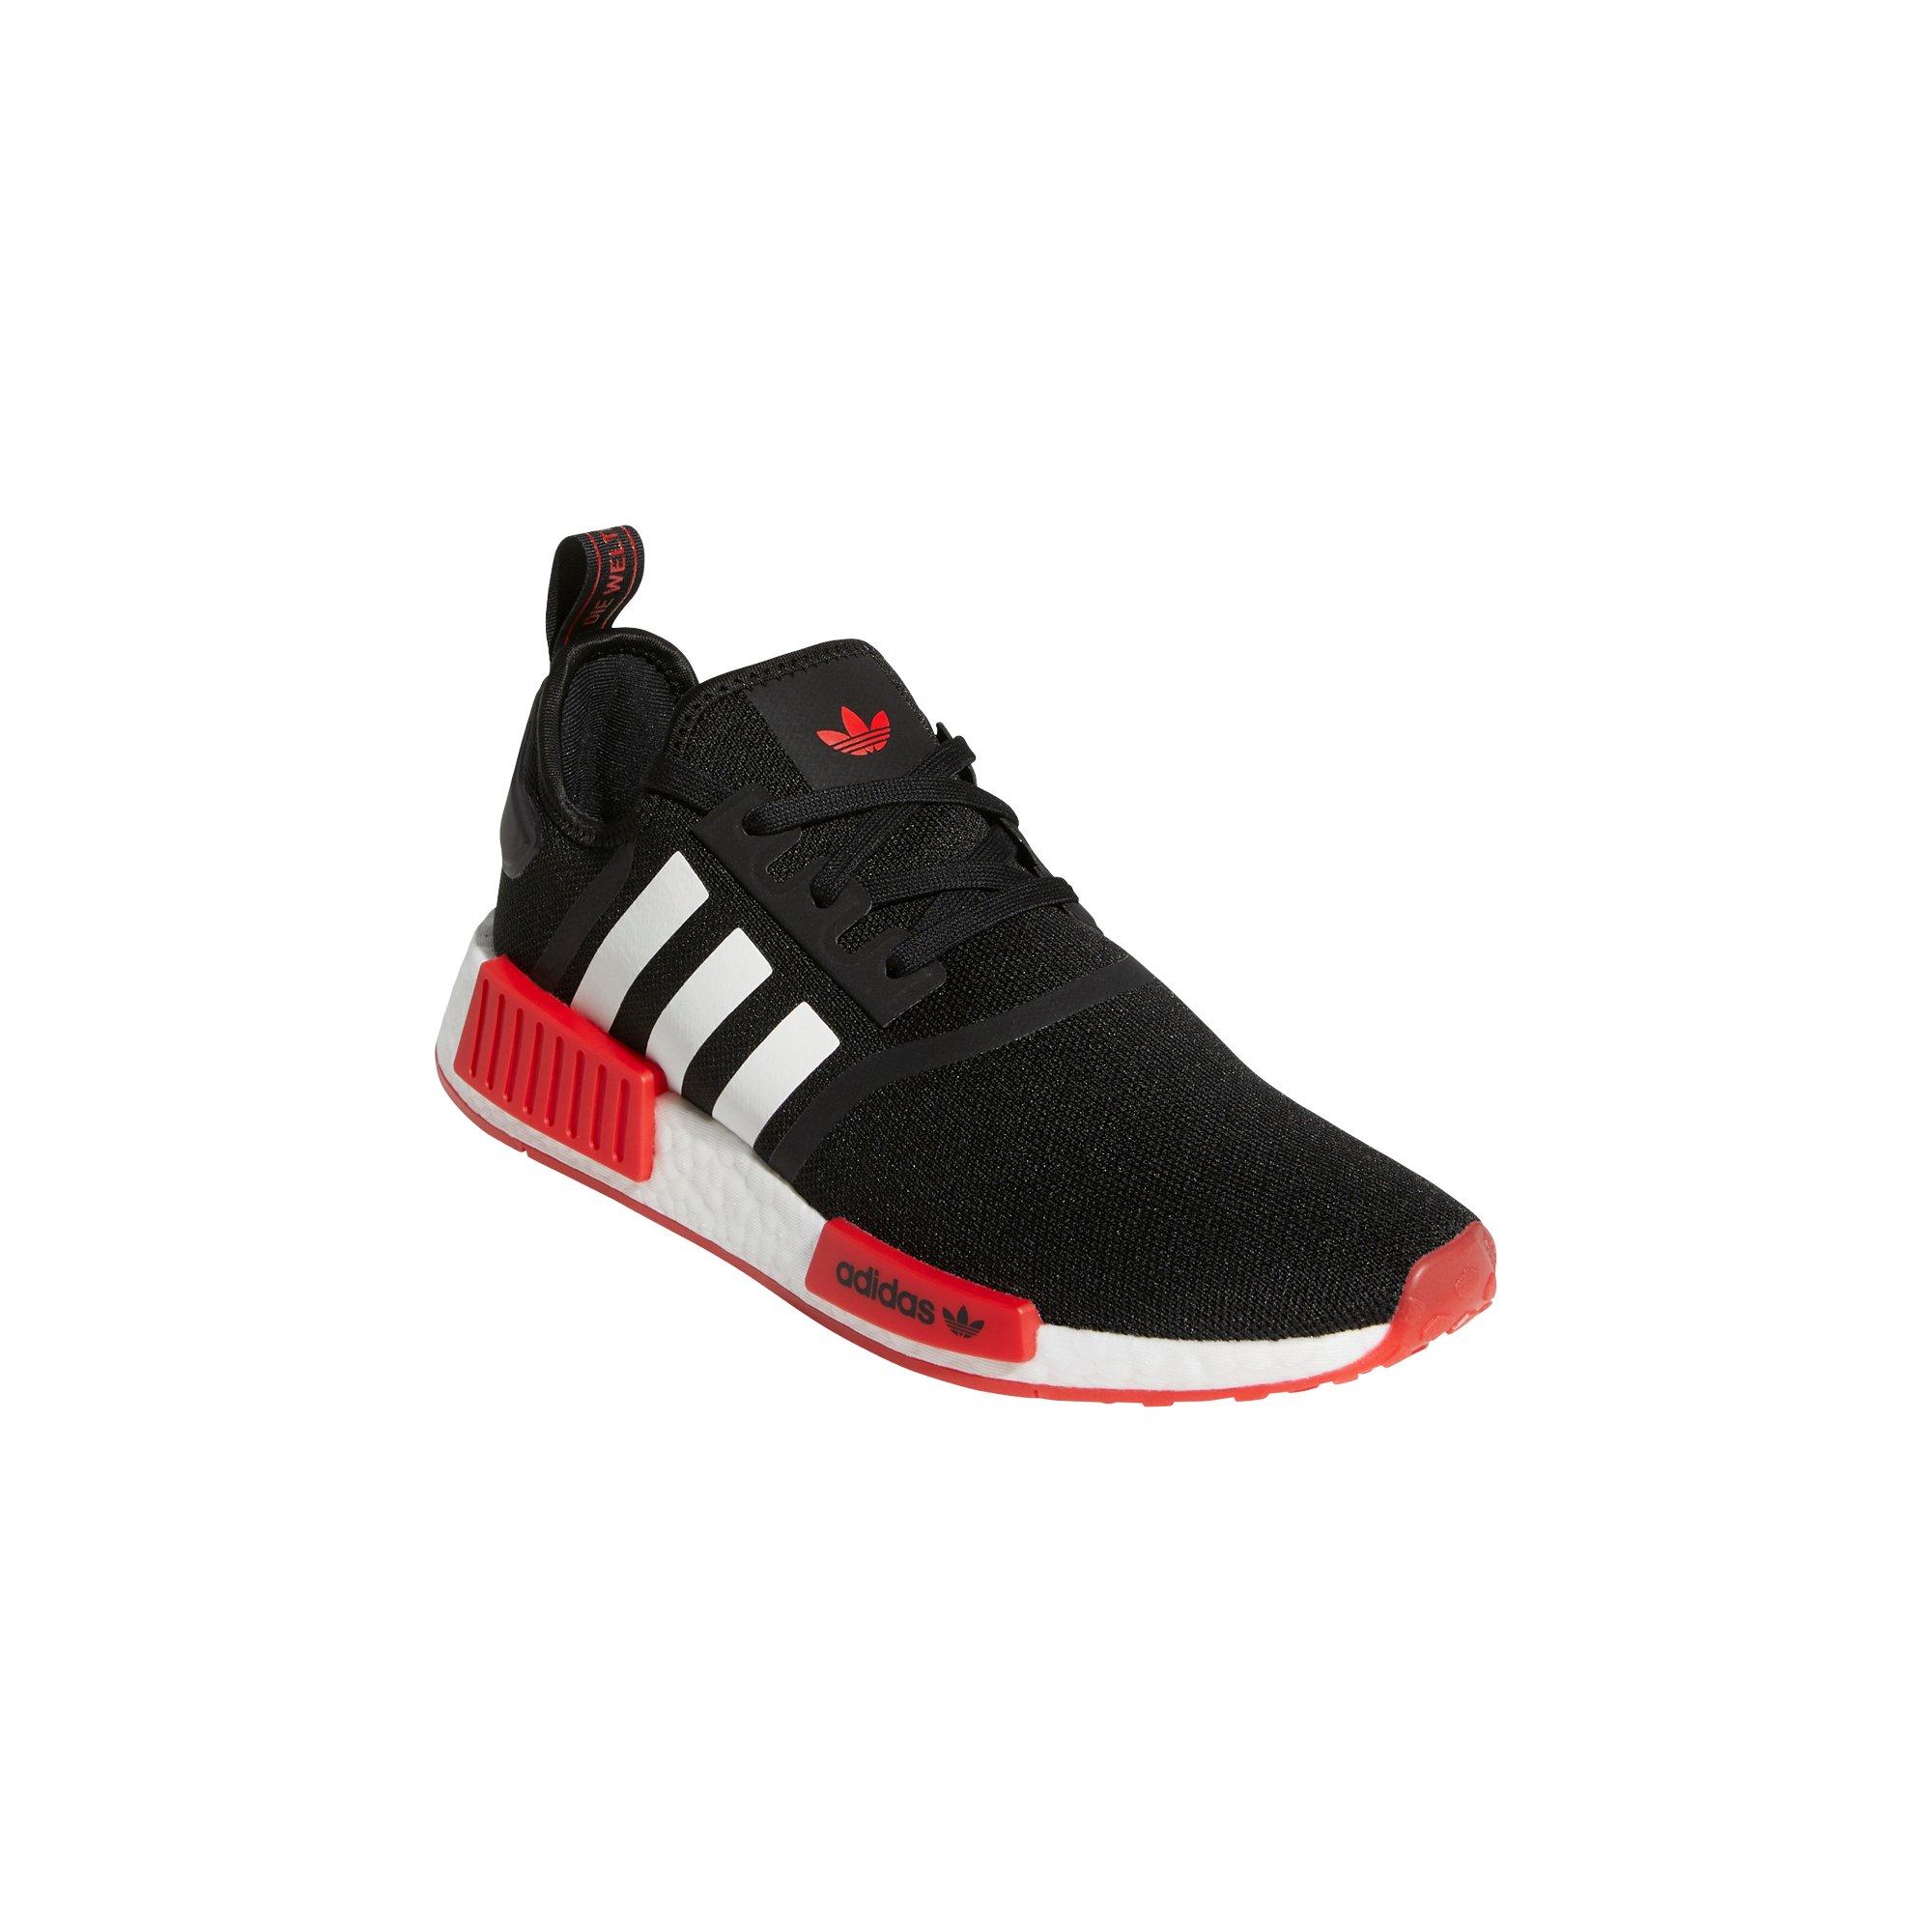 adidas NMD_R1 "Core Black/Ftwr White/Vivid Red" Men's Running